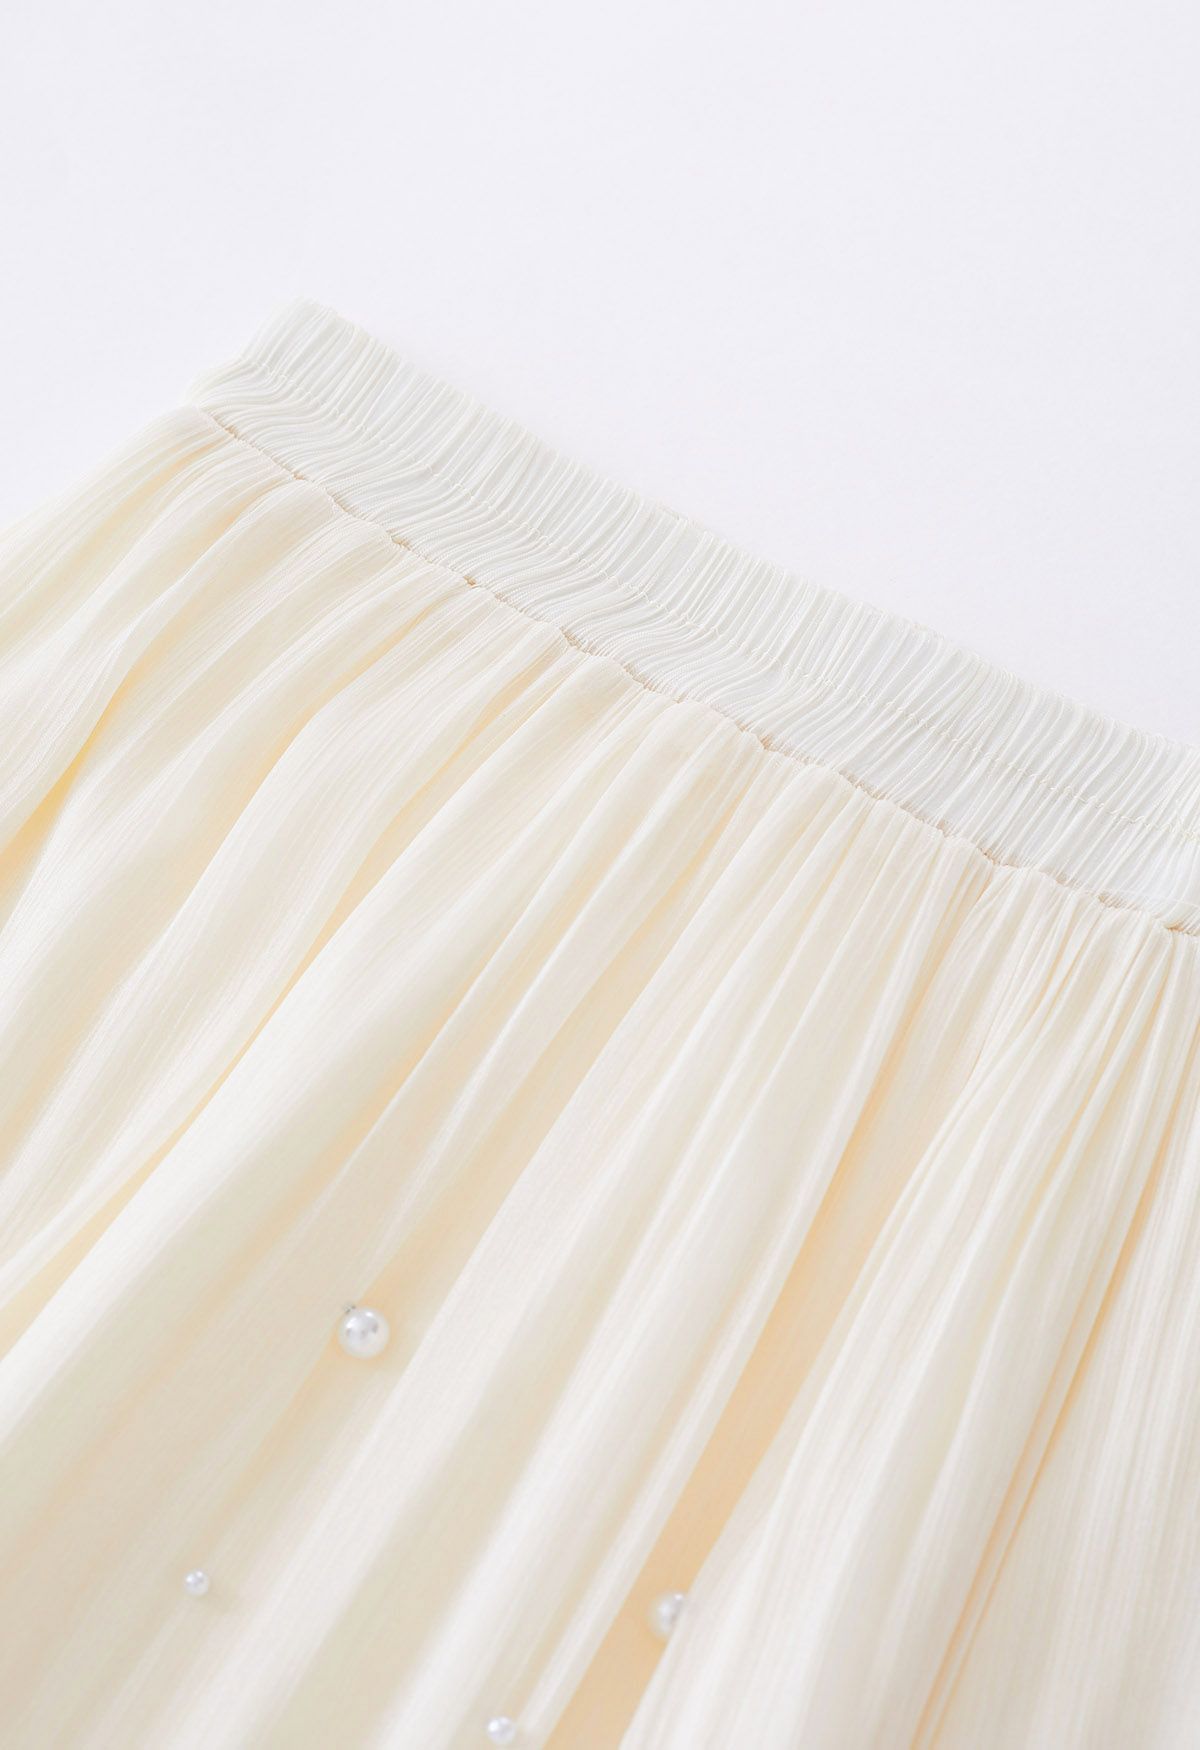 Irregular Pearl Shimmer Chiffon Skirt in Cream